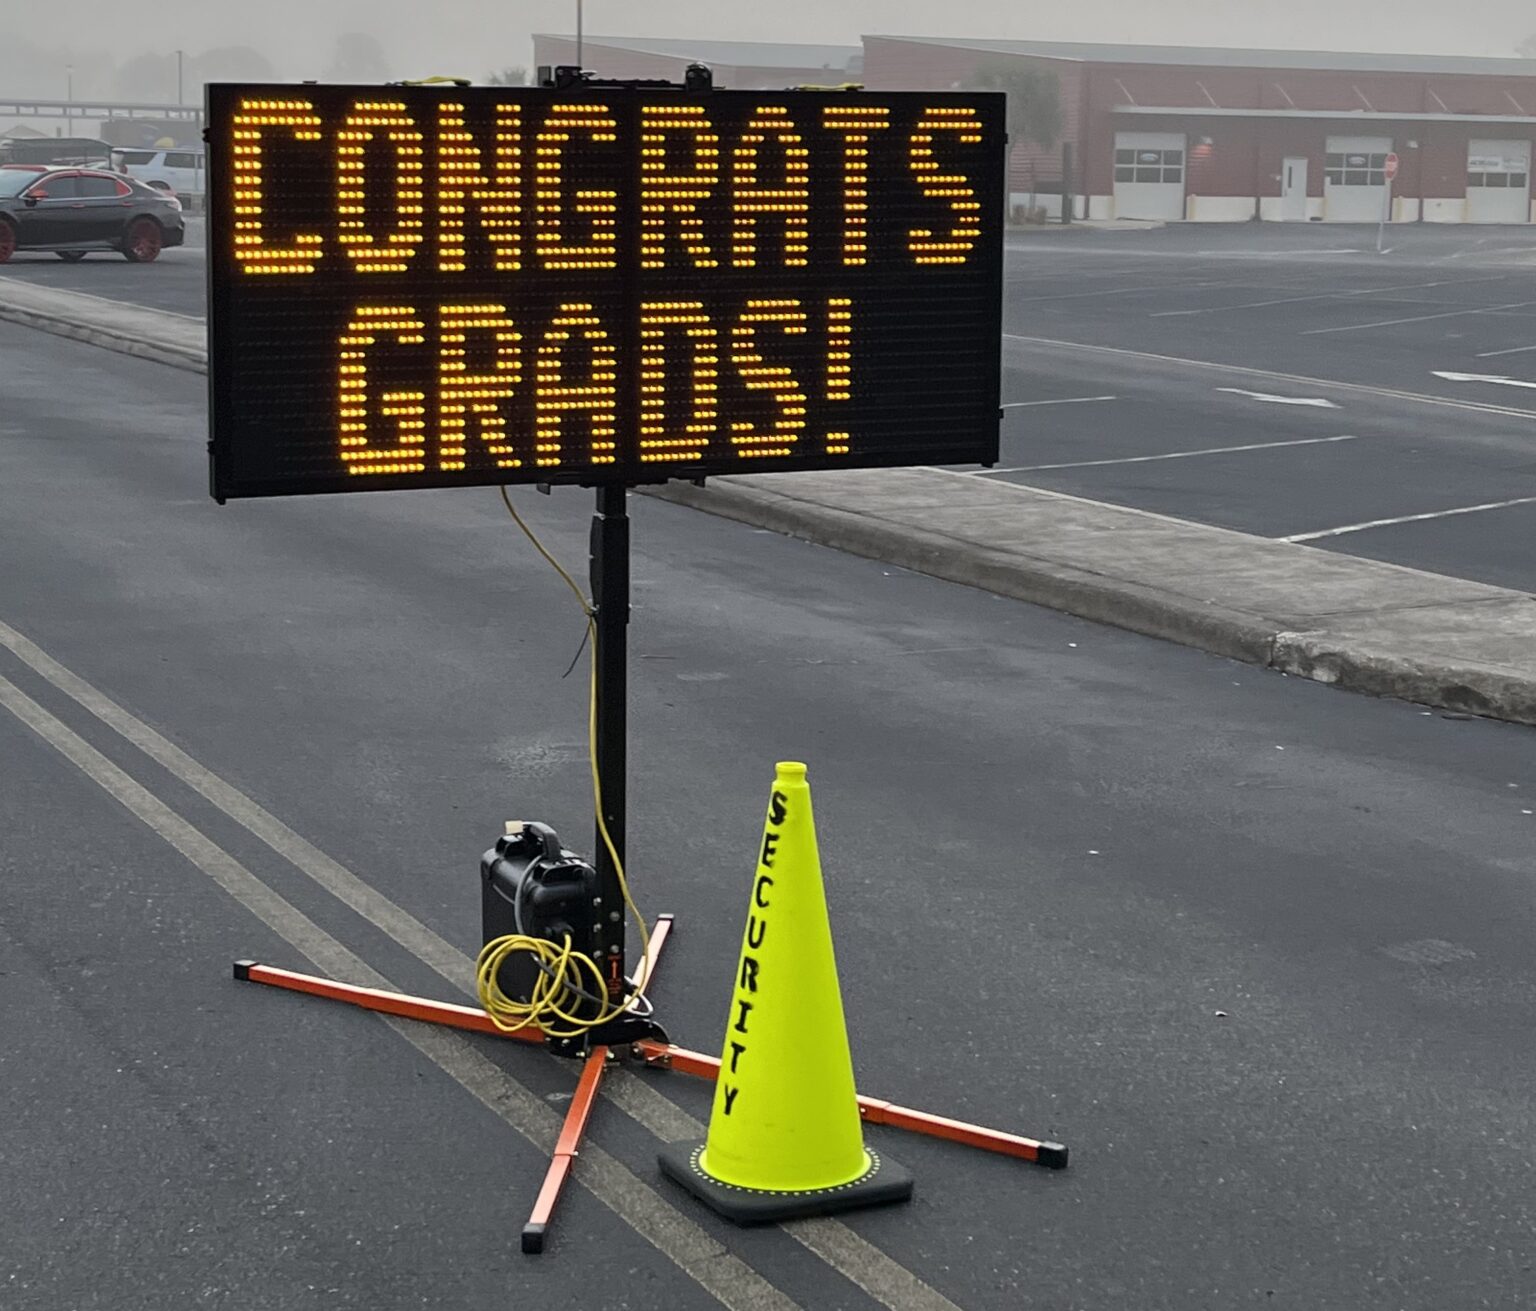 Message board congratulating high school graduates 